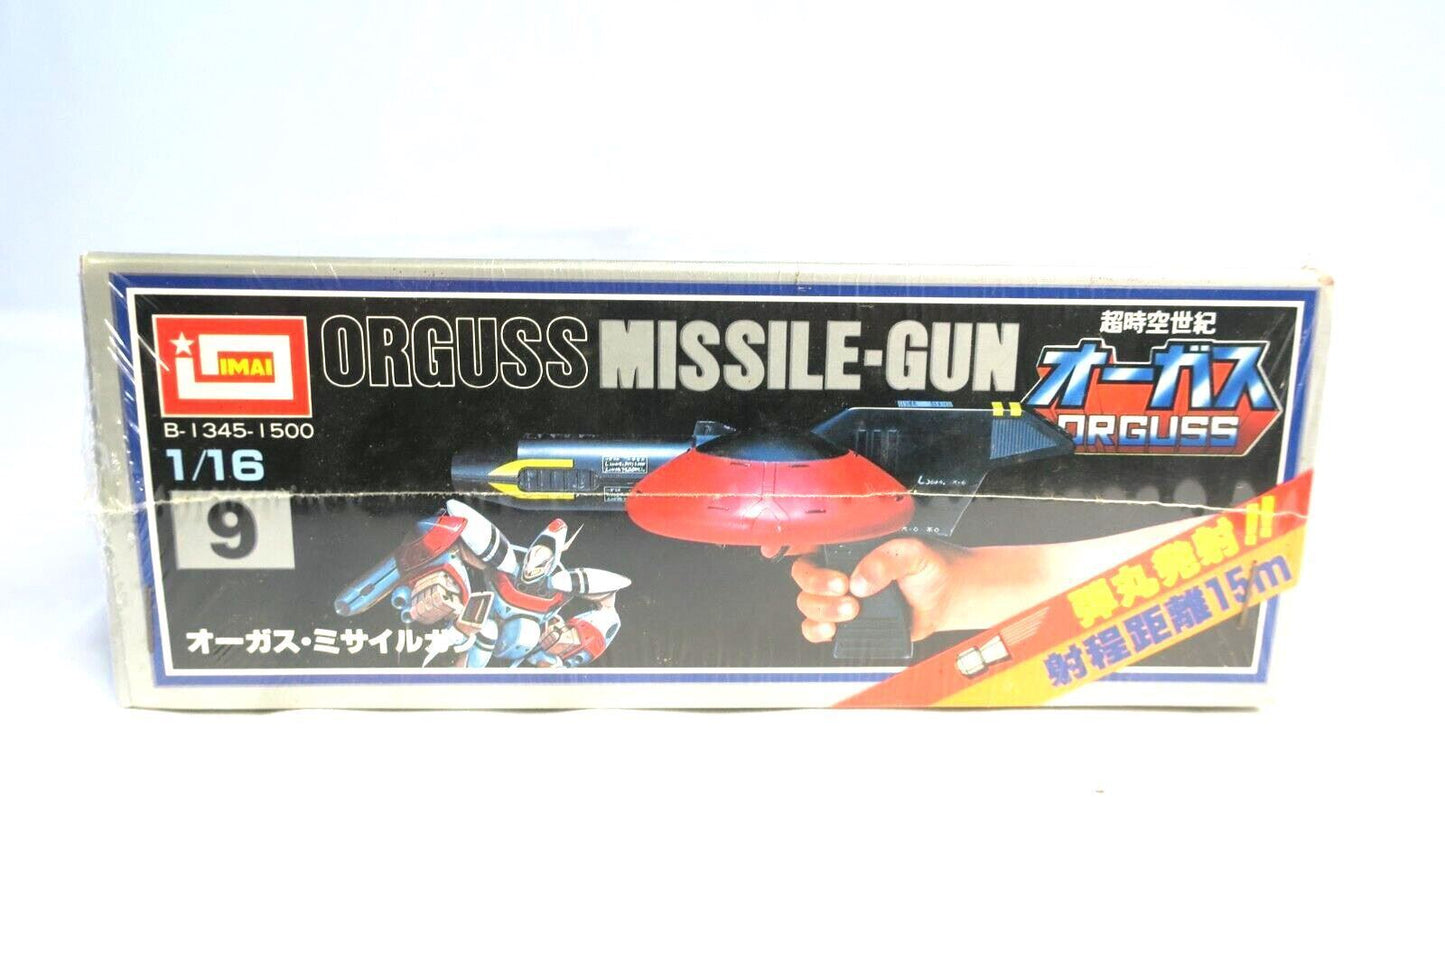 Vintage Orguss Missile Gun, 1/16 Scale Model Kit Mint In Box B-1345-1500 D8